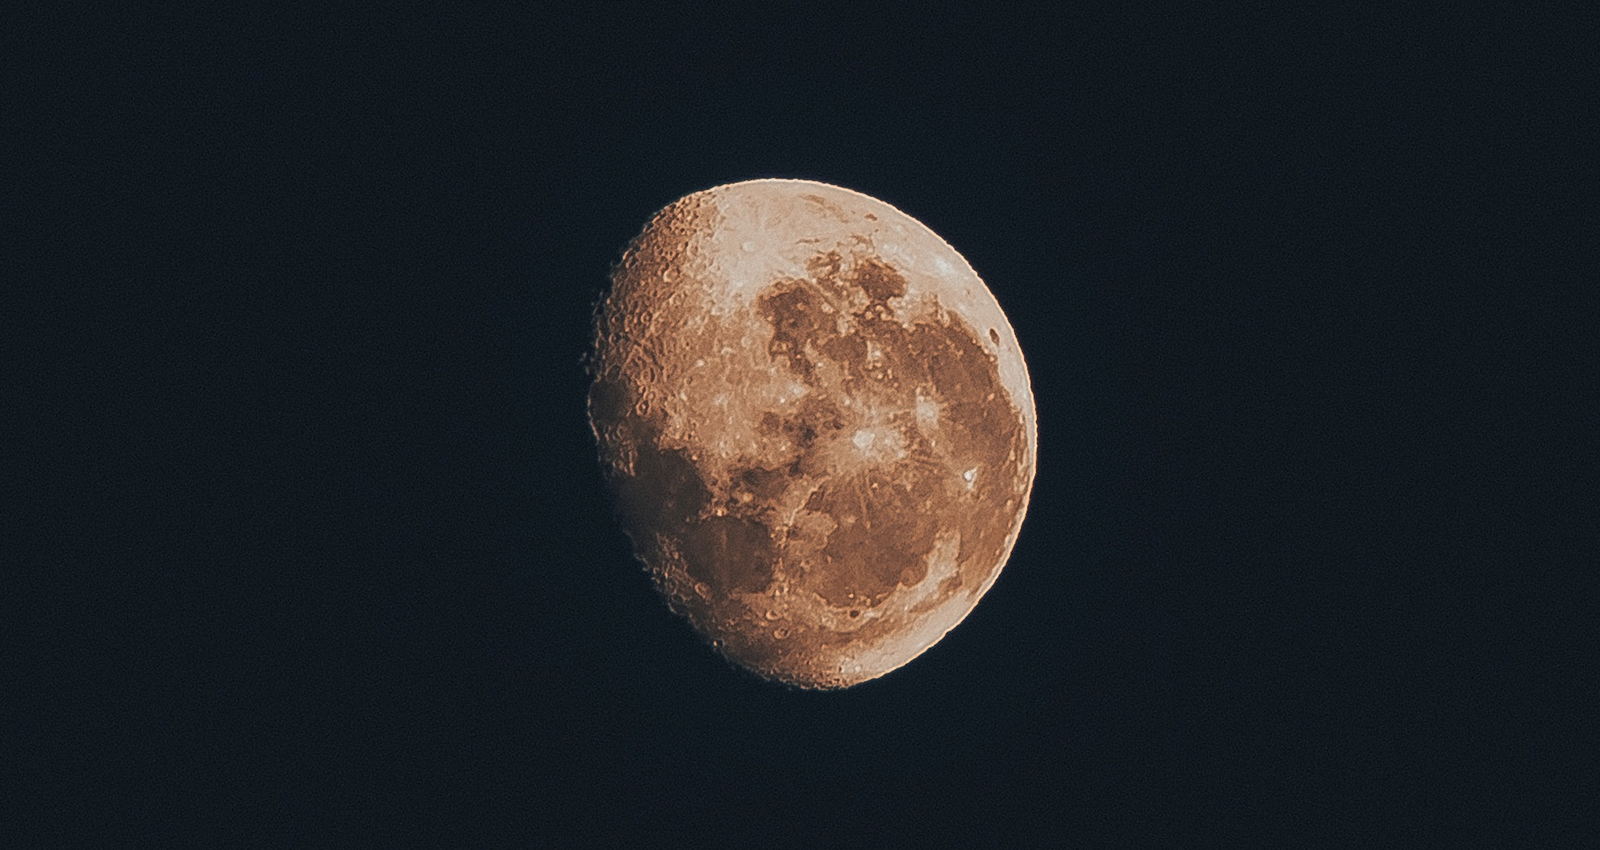 Explore the moon with ESSENWI Telescope